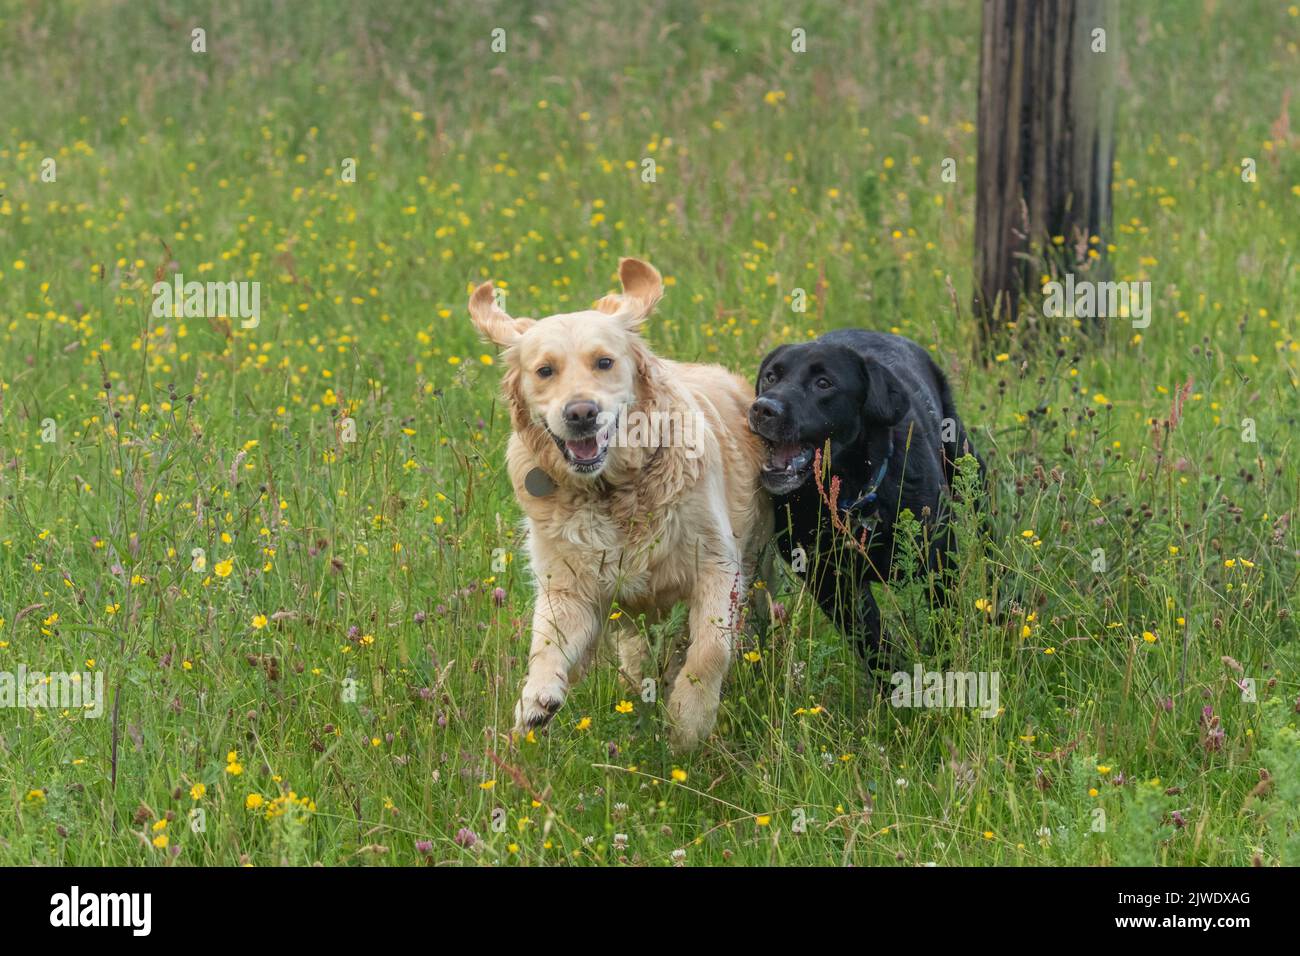 A golden retriever and a black labrador retriever running together in a field. Stock Photo